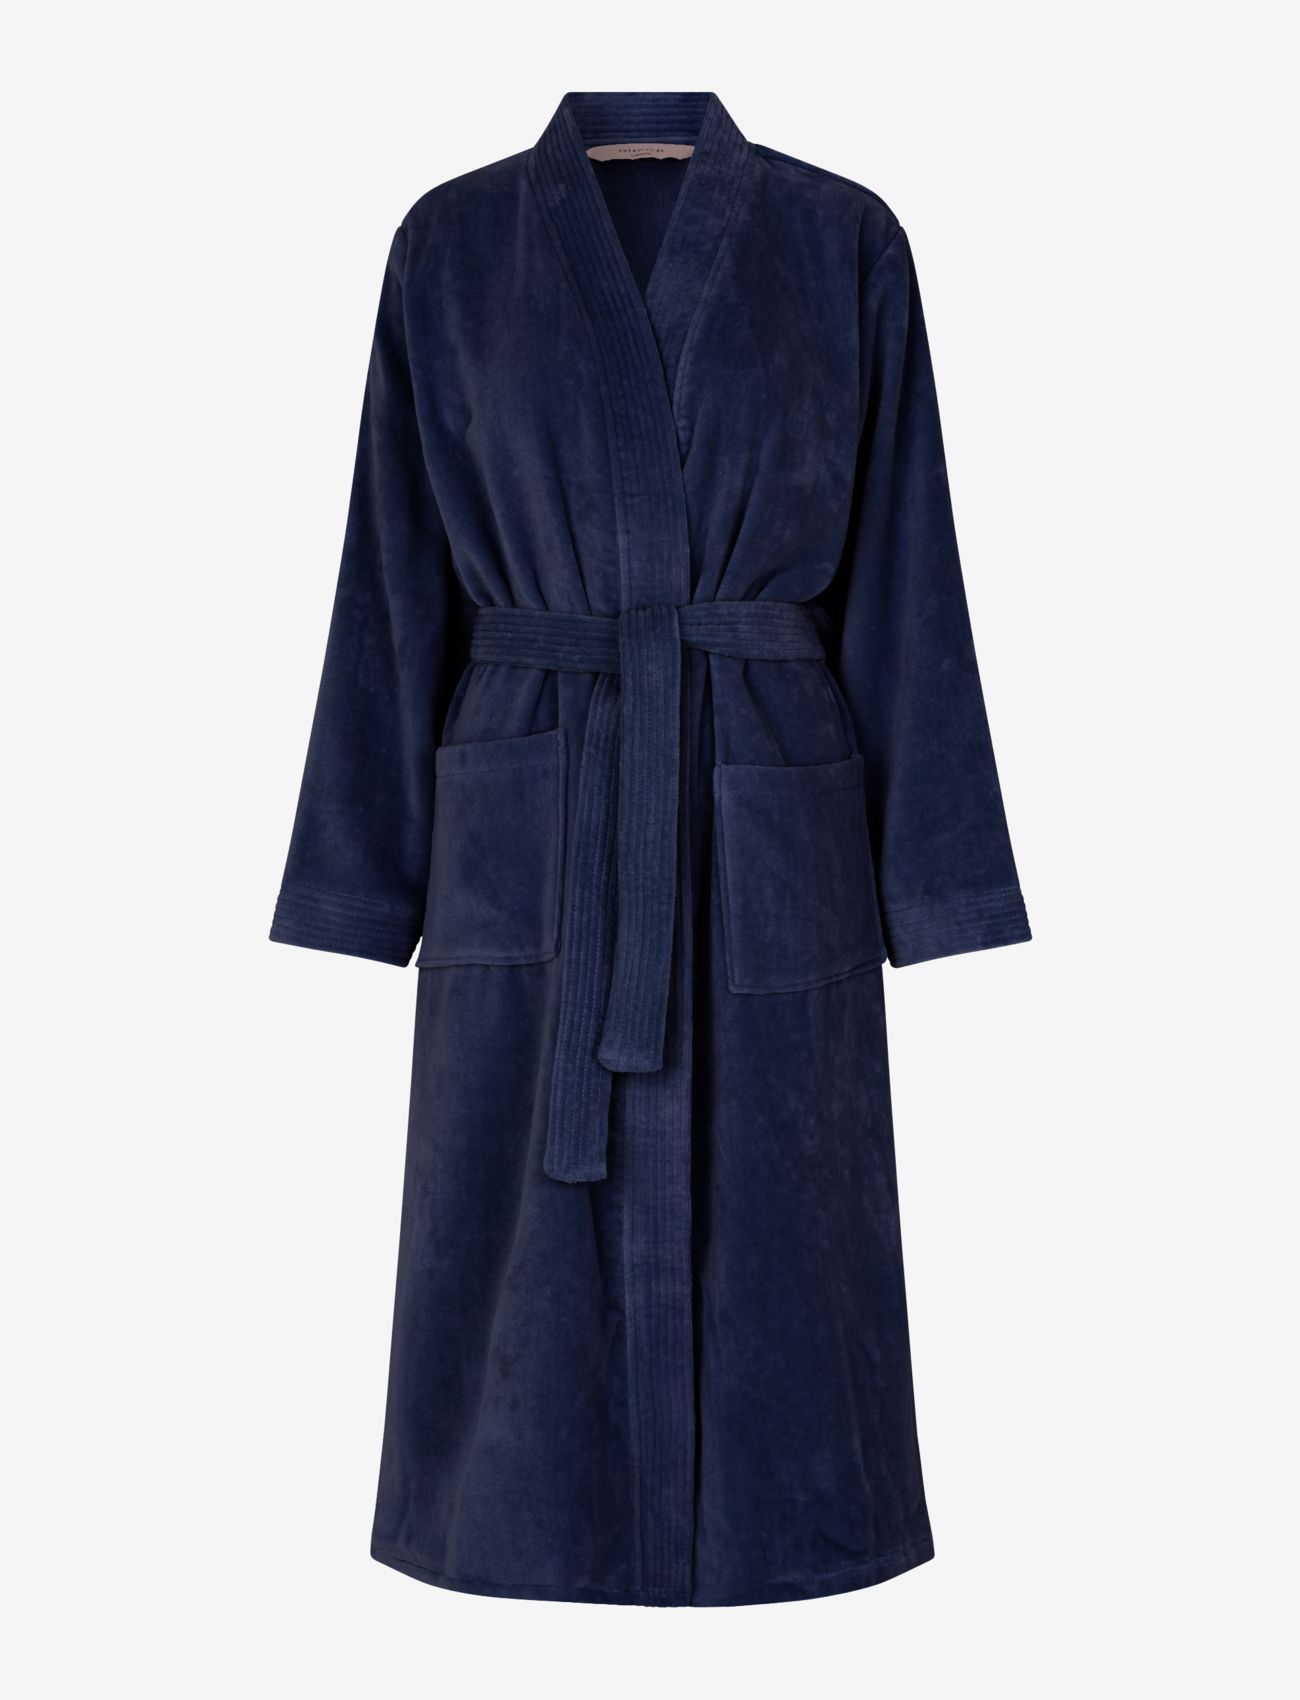 Rosemunde - Organic robe - geburtstagsgeschenke - navy - 0